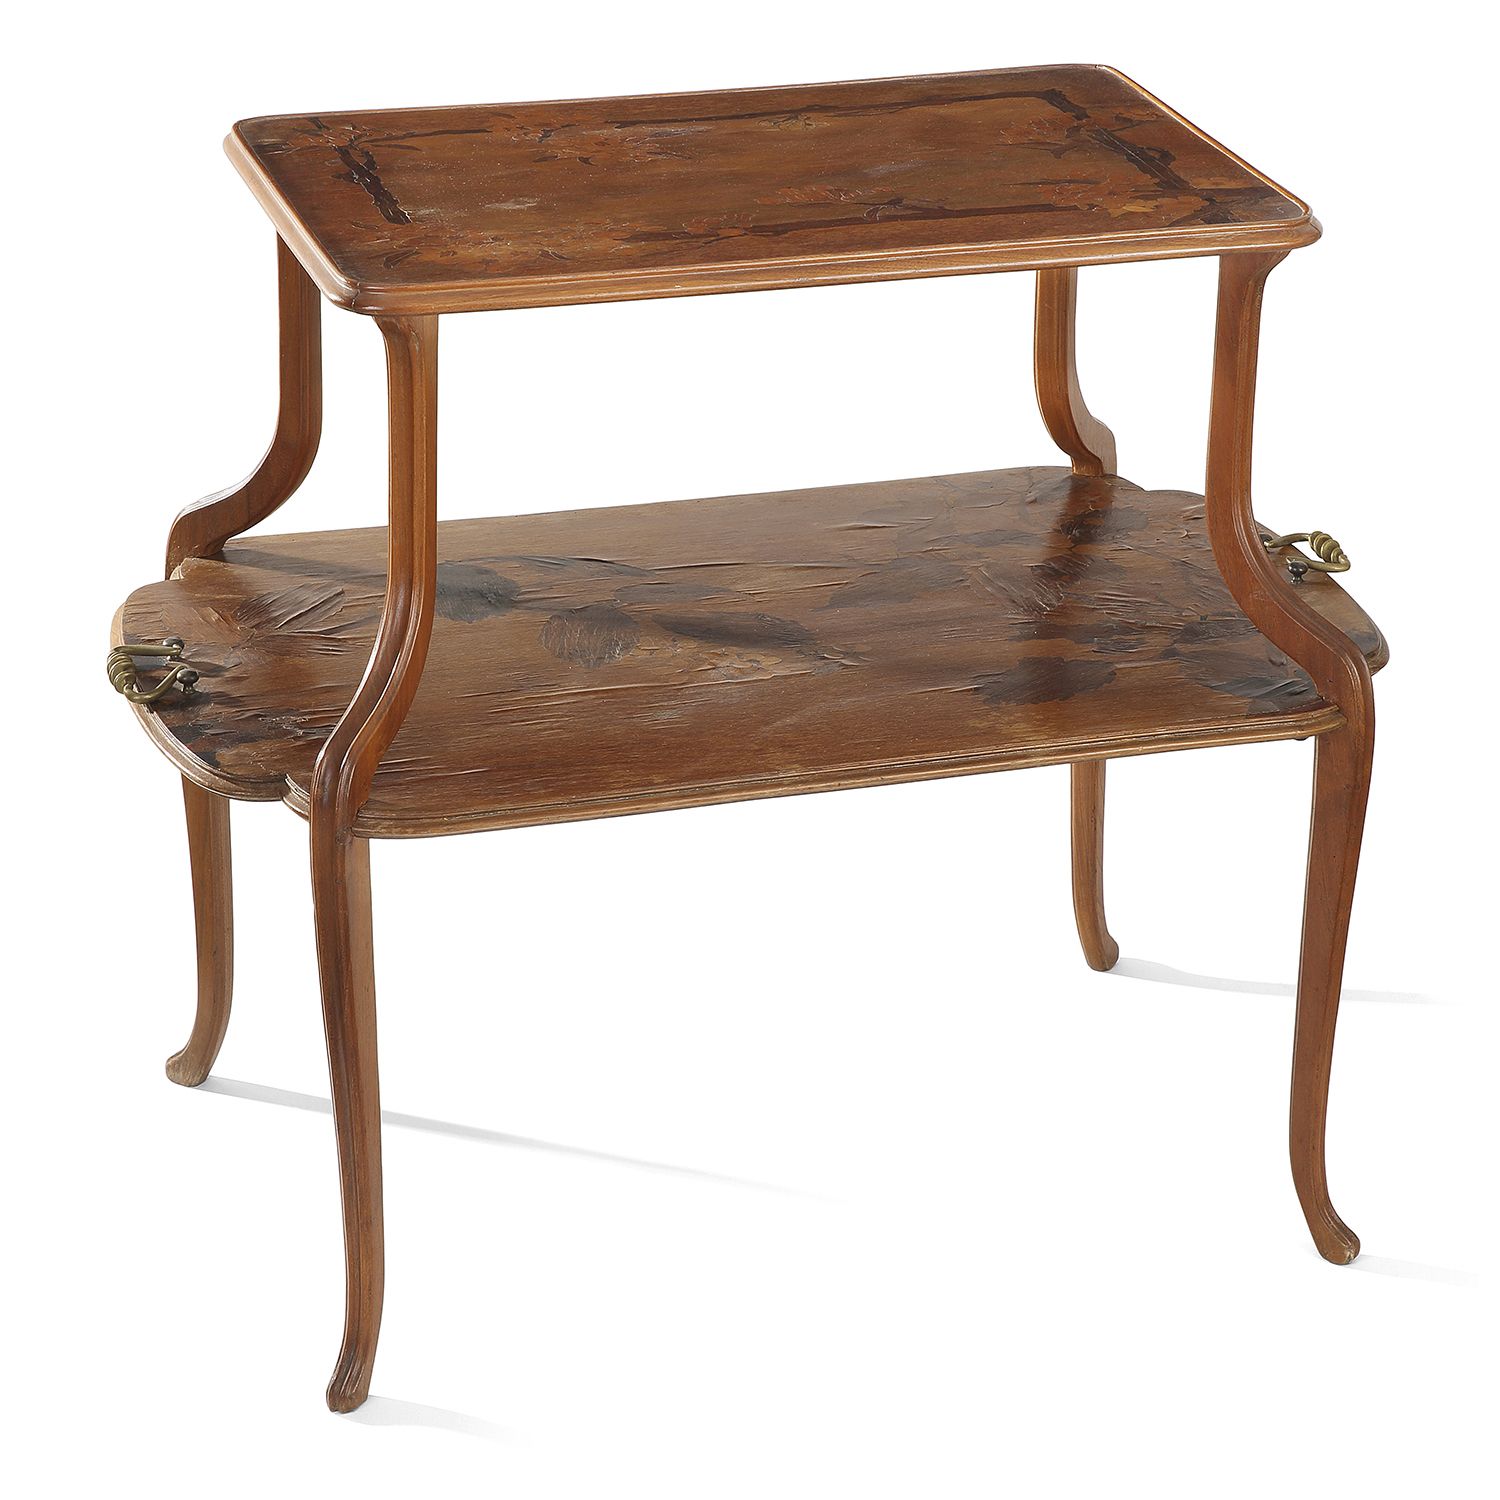 Null 路易斯-马约拉尔(1859-1926)

有两个托盘的茶桌，雕刻的胡桃木植物底座，上层托盘镶嵌有苹果树枝的装饰，下层托盘有花枝的装饰，鎏金铜植物把手。&hellip;